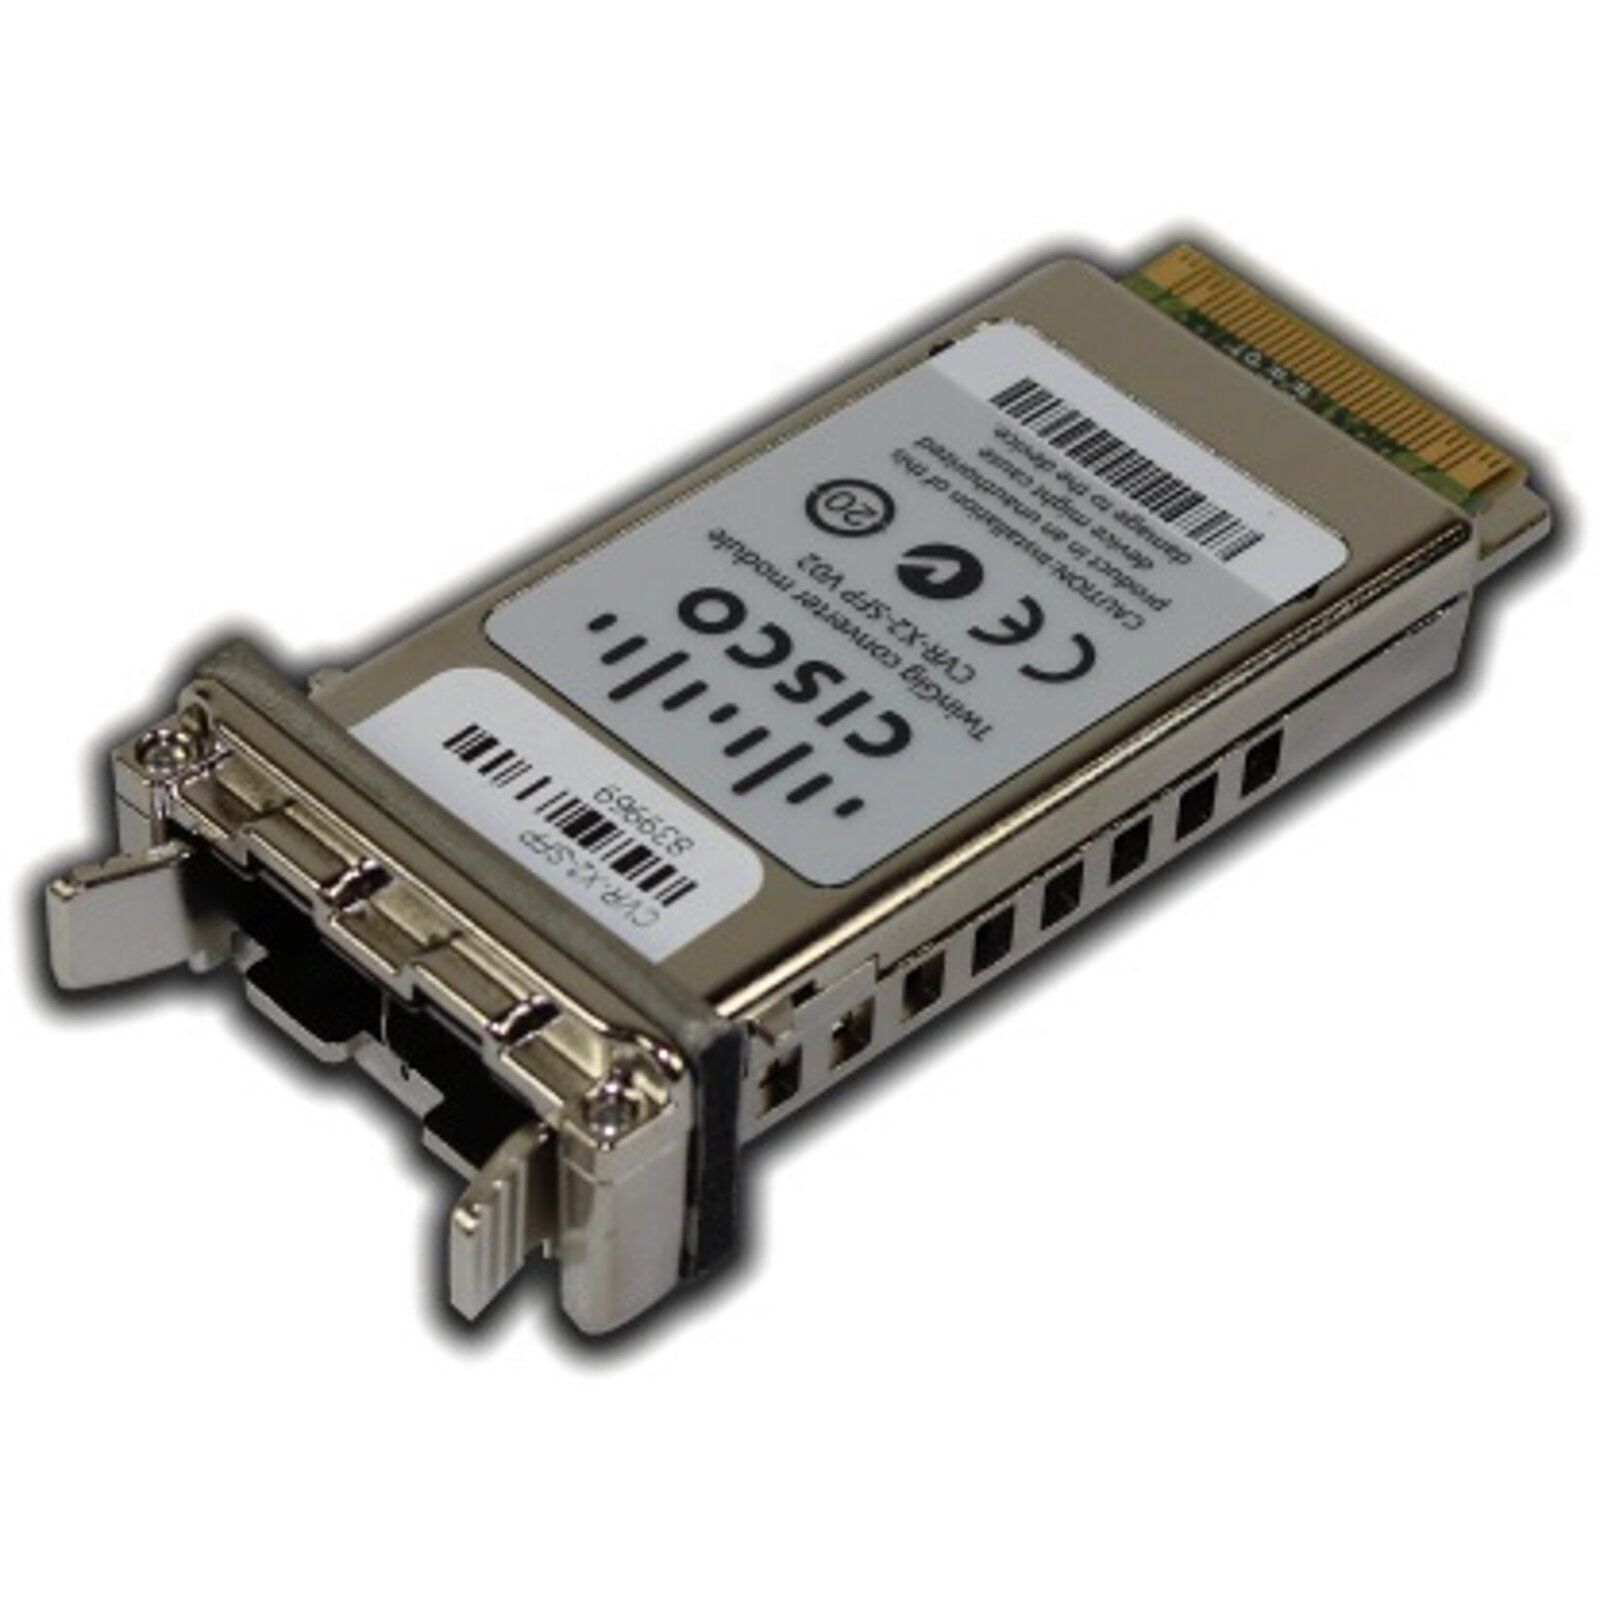 Cisco CVR-X2-SFP X2 to 2P 1GbE SFP Adapter (CVR-X2-SFP)